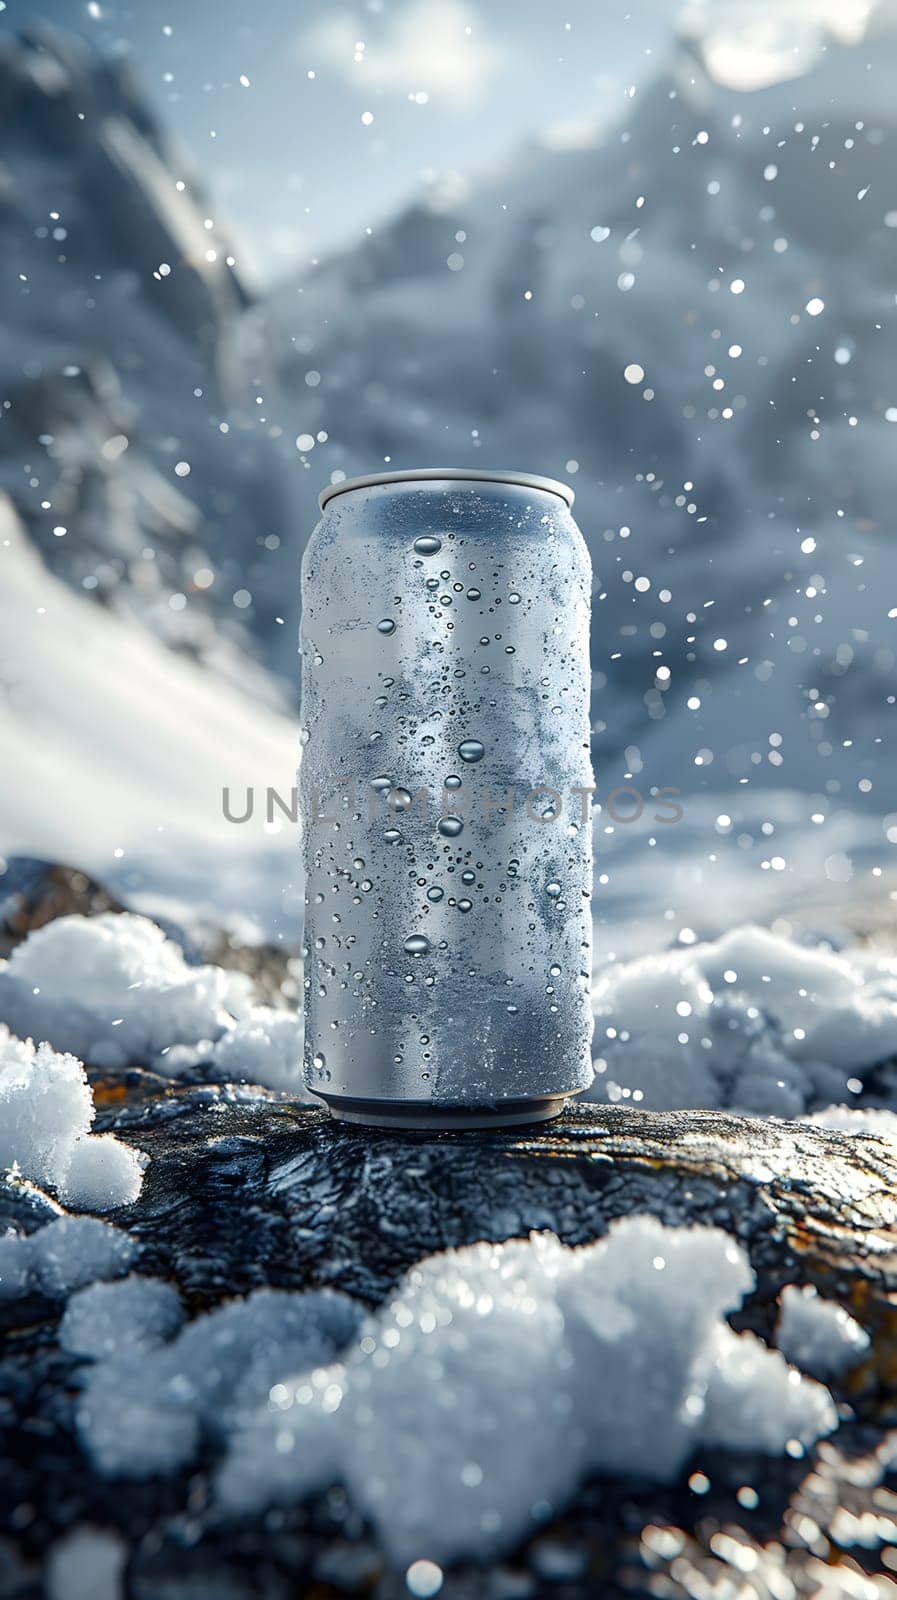 Liquid soda freezes on a snowy rock, creating a glacial landform by Nadtochiy